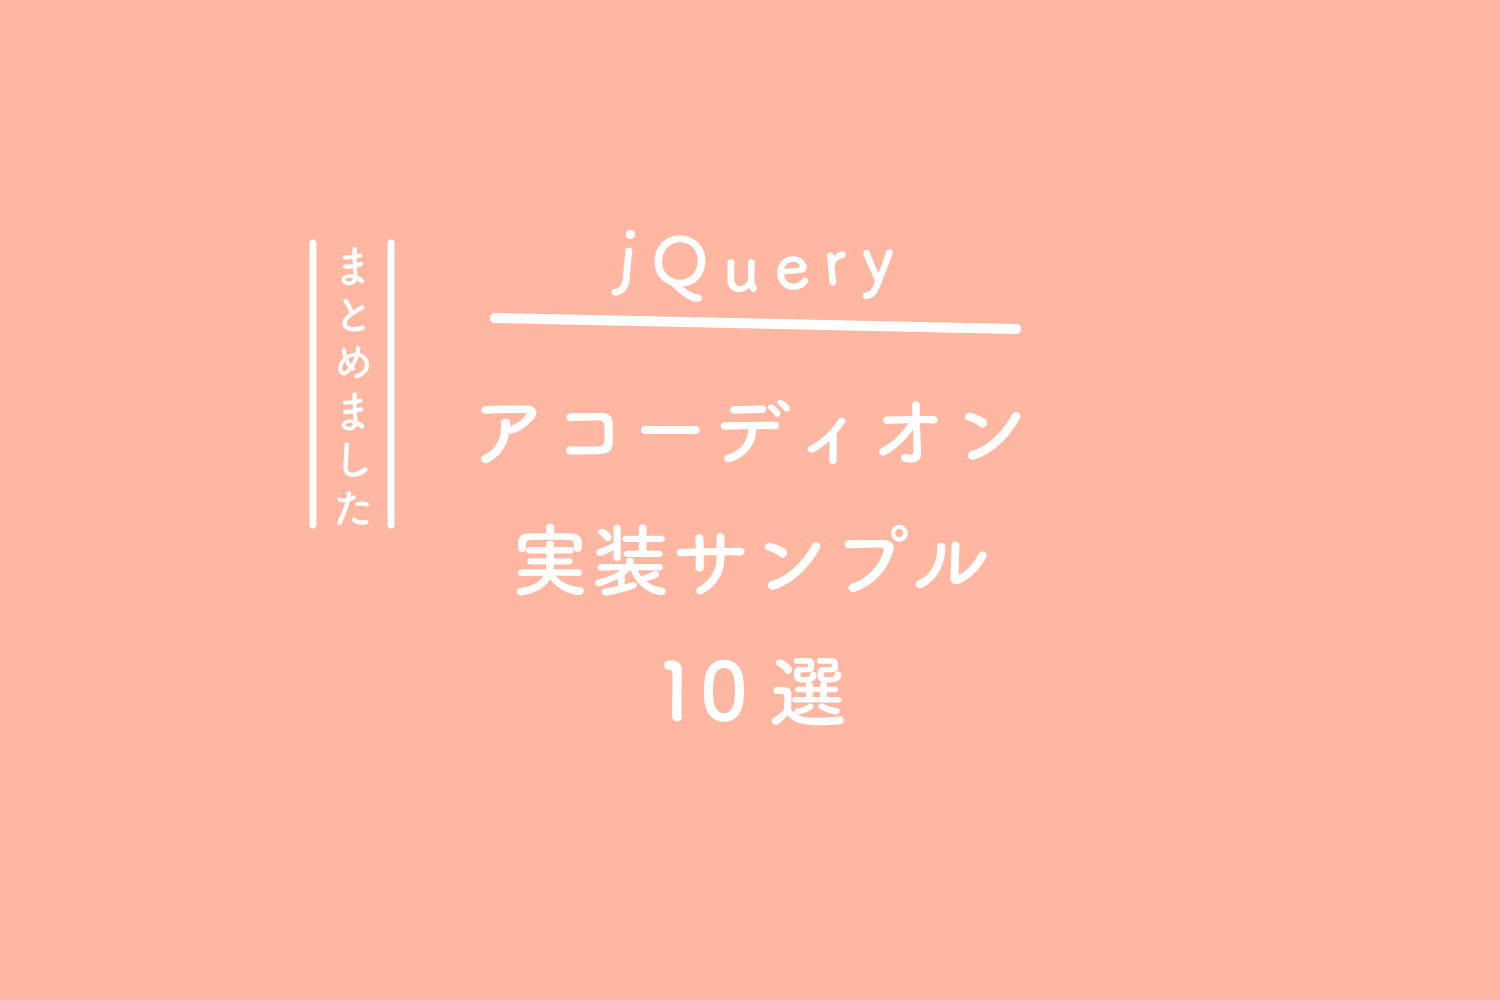 【jQuery】アコーディオン実装サンプル10選